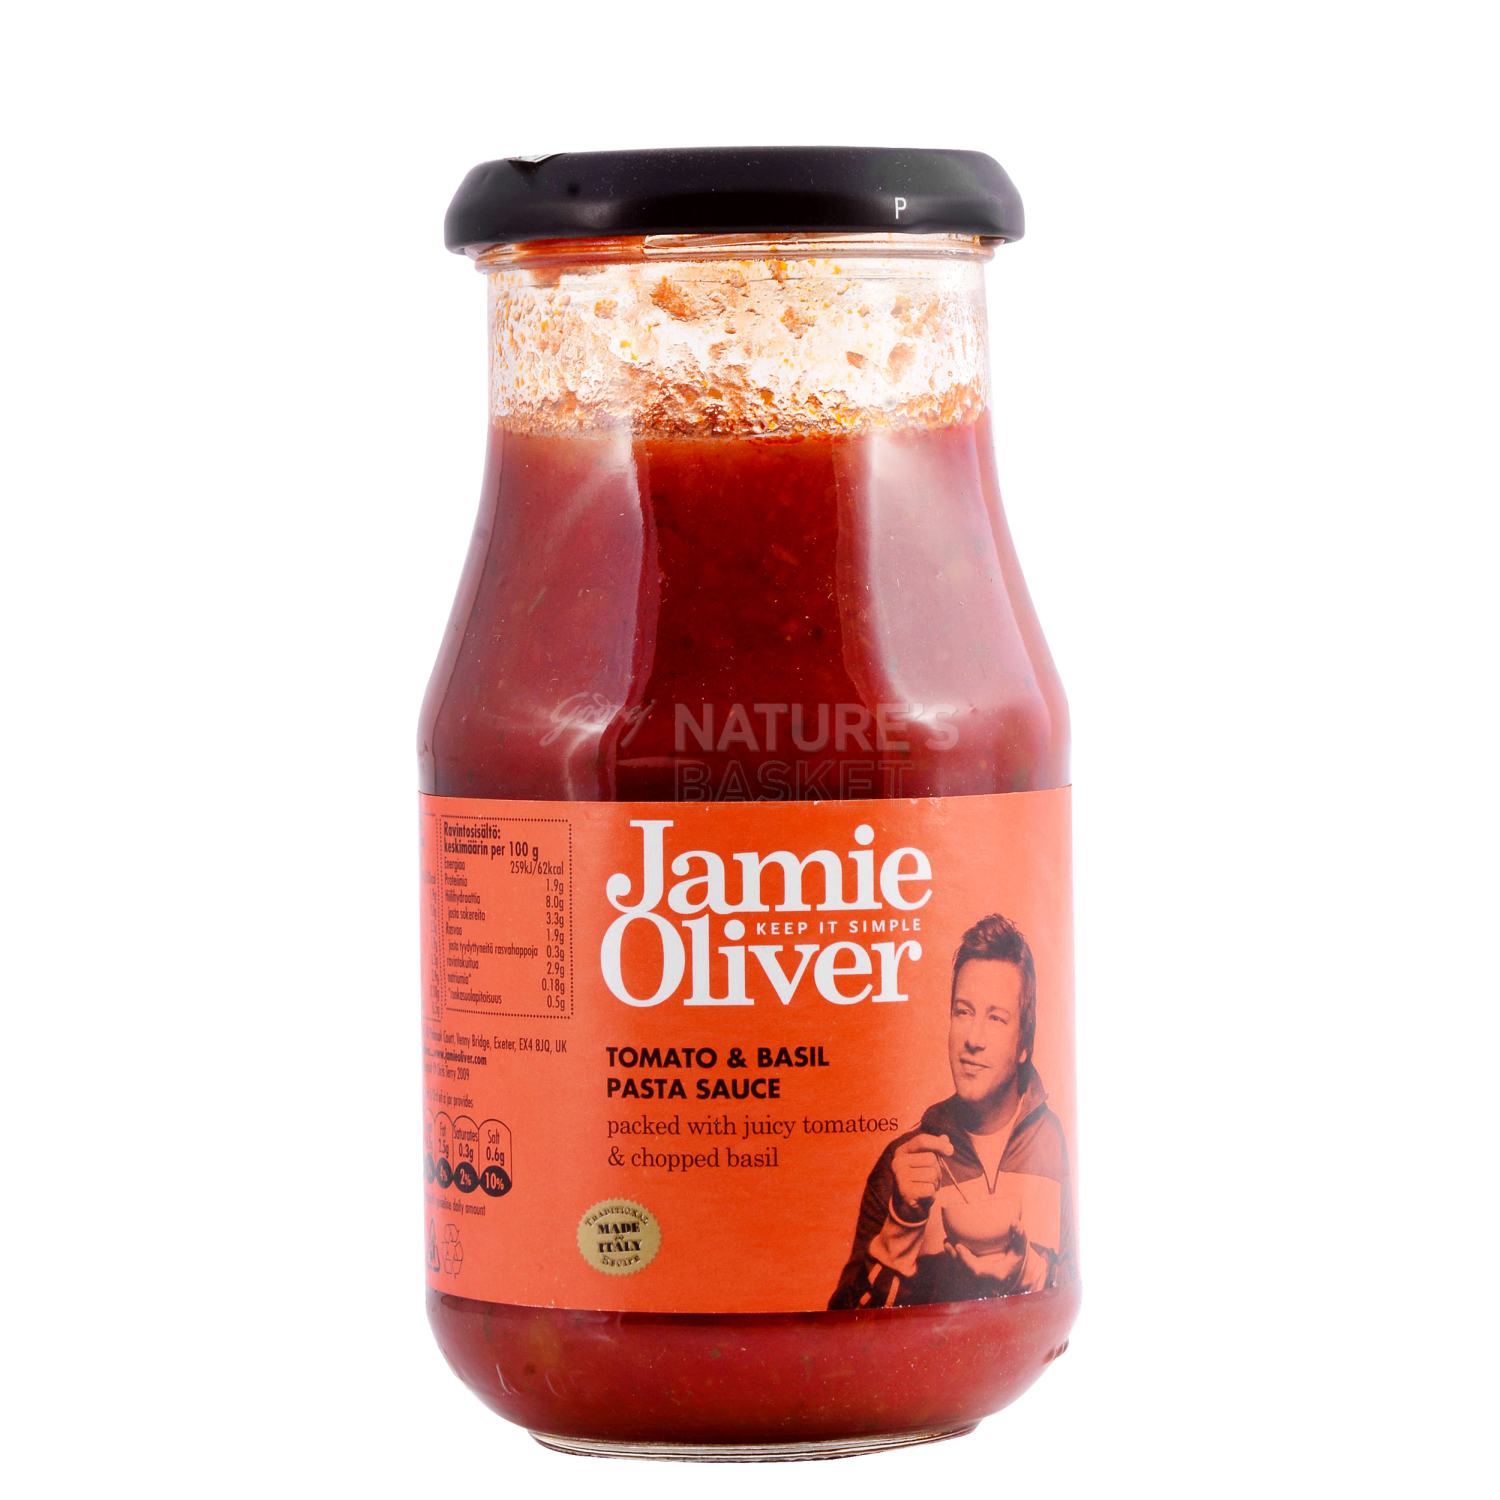 Tomato & Basil Pasta Sauce - Jamie Oliver 